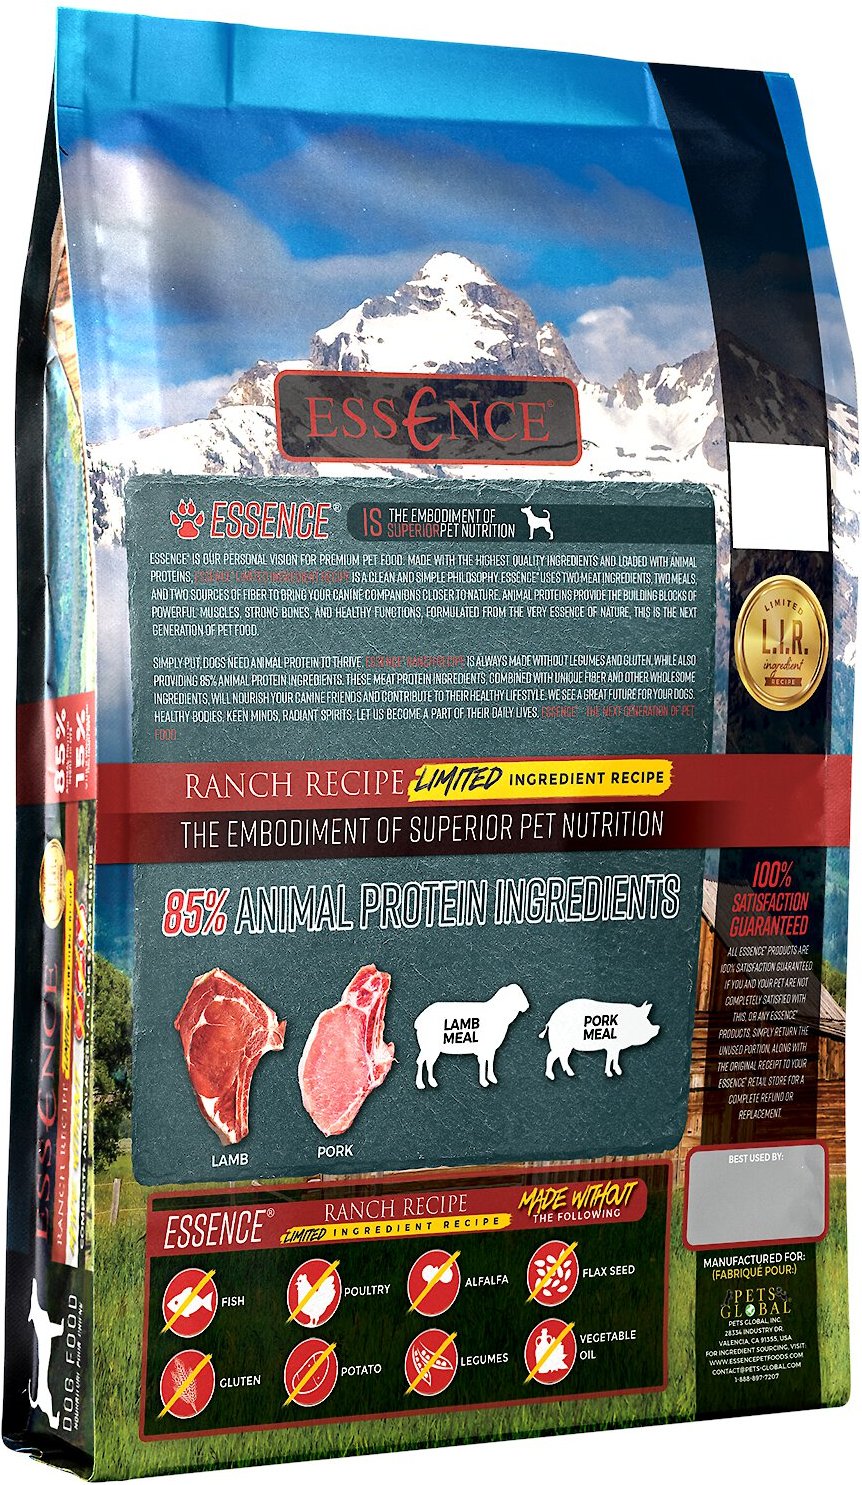 ESSENCE Limited Ingredient Recipe Ranch Recipe Dry Dog Food, 25lb bag